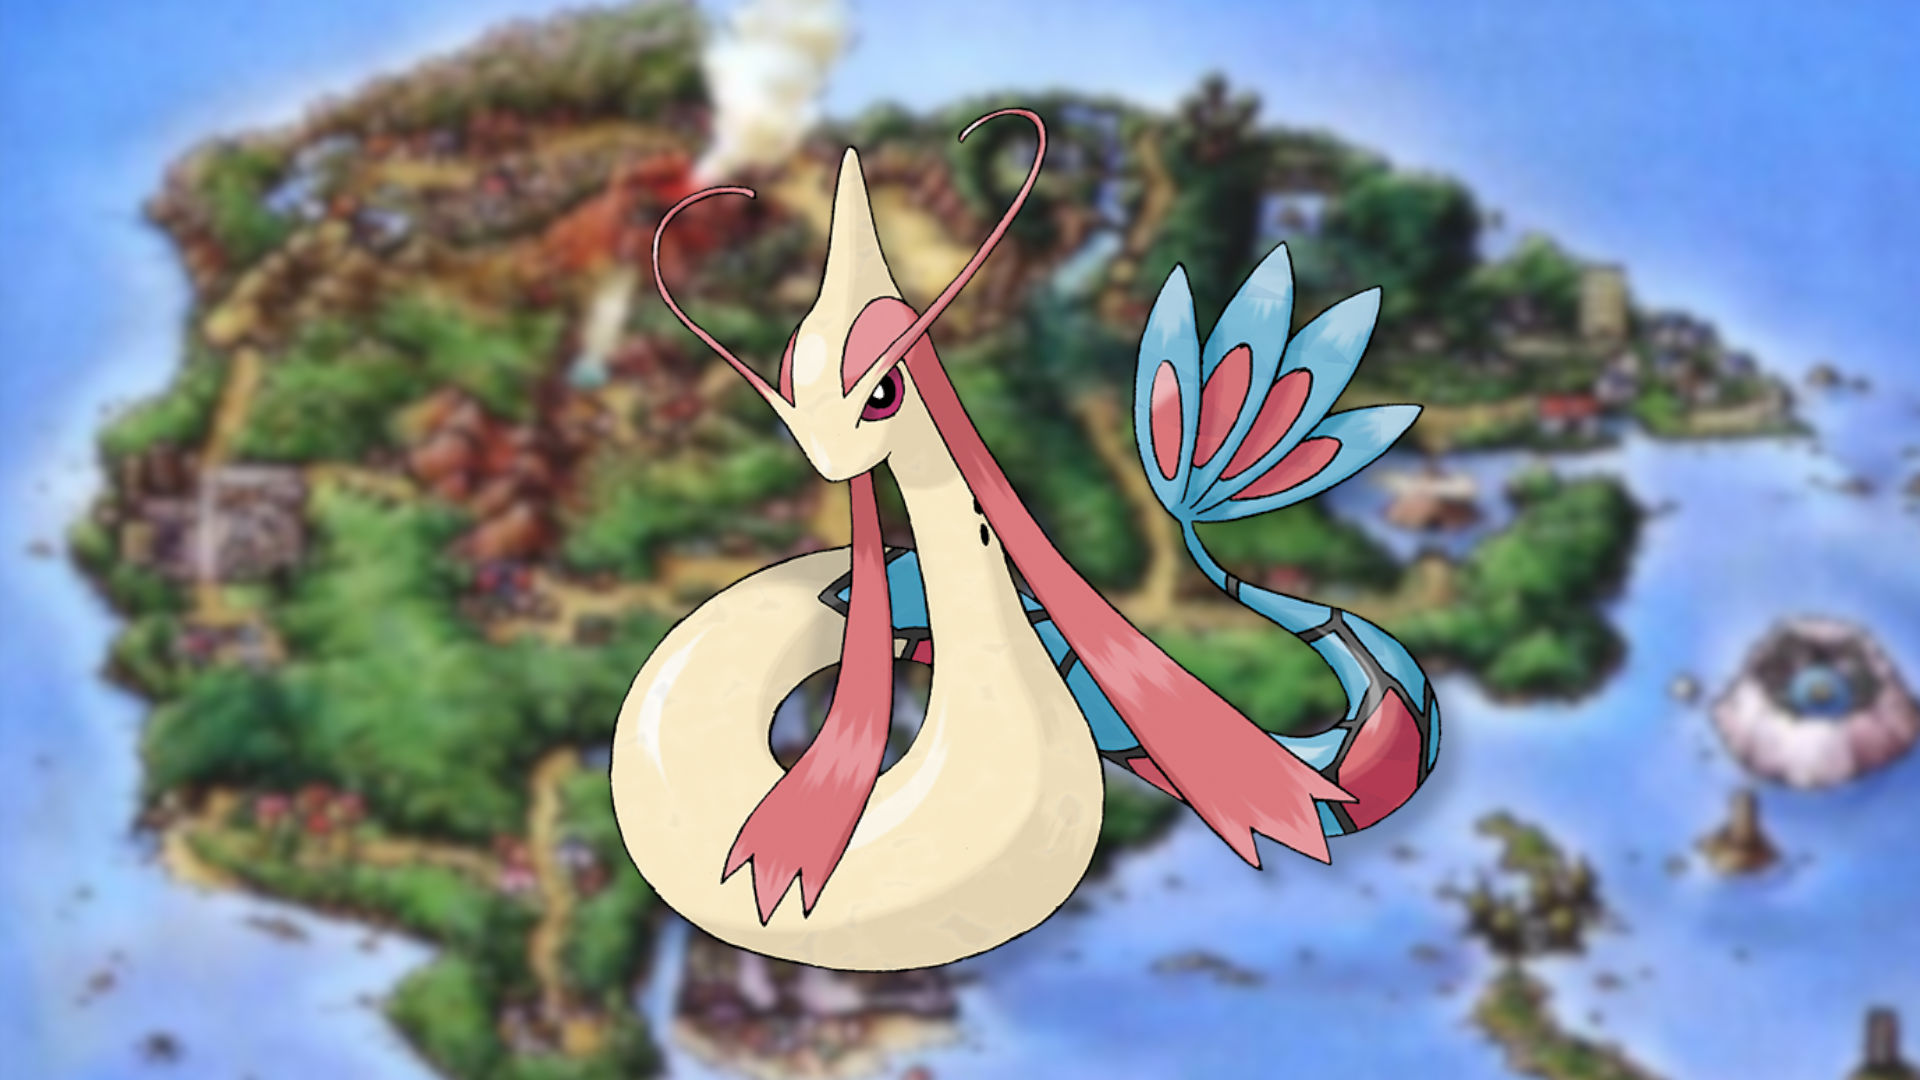 Milotic a gen 3 Pokémon, on a Hoenn background